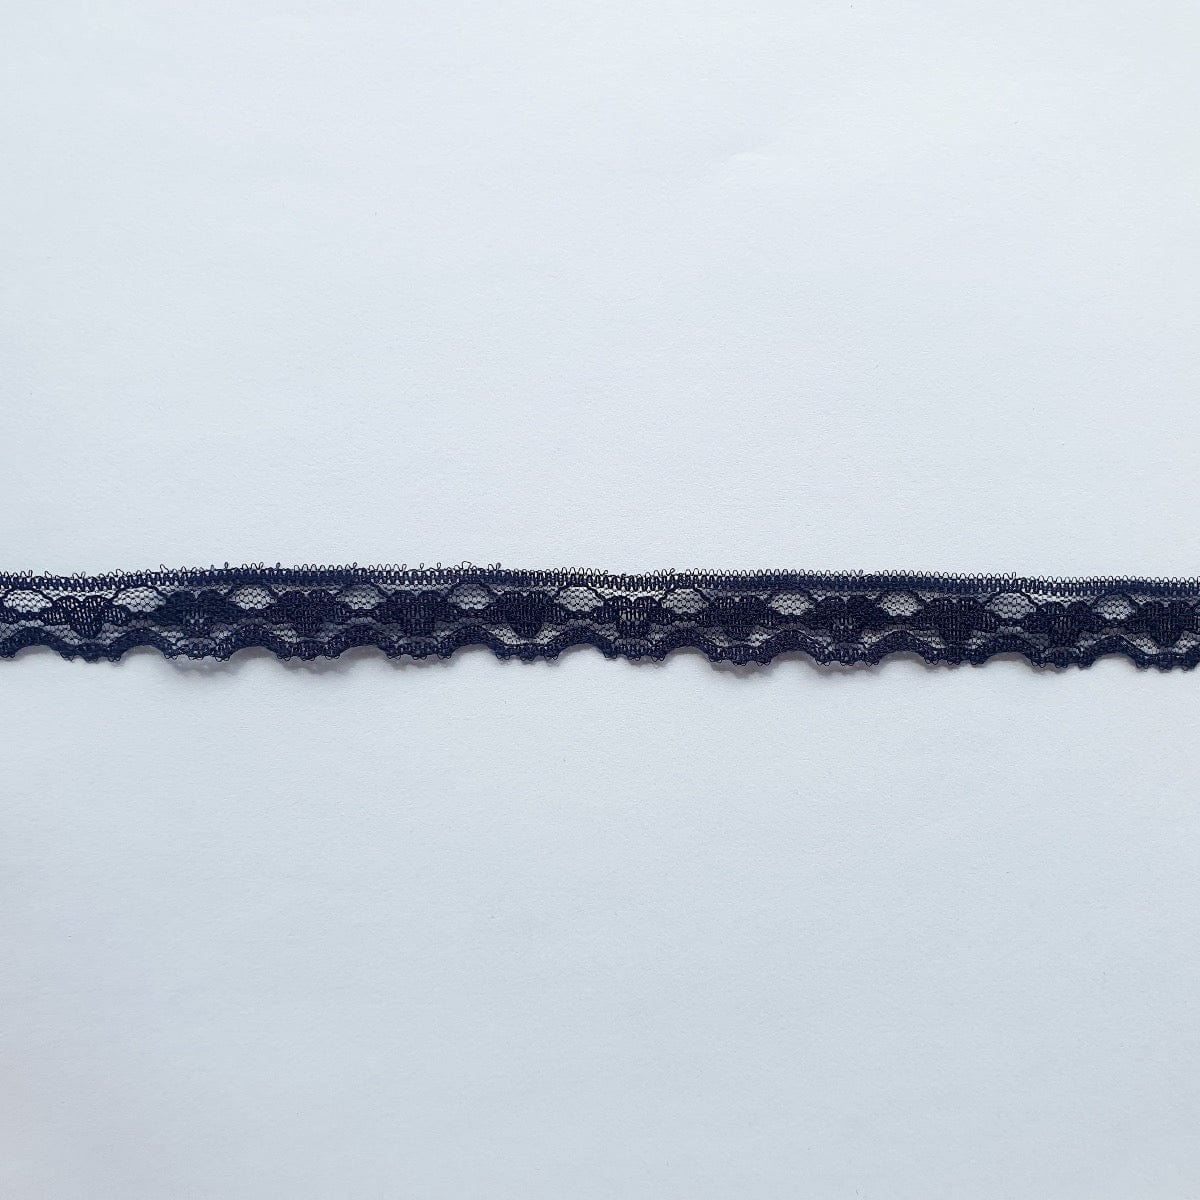 Nylon Lace Trim: 15mm wide: Black. Price per metre.